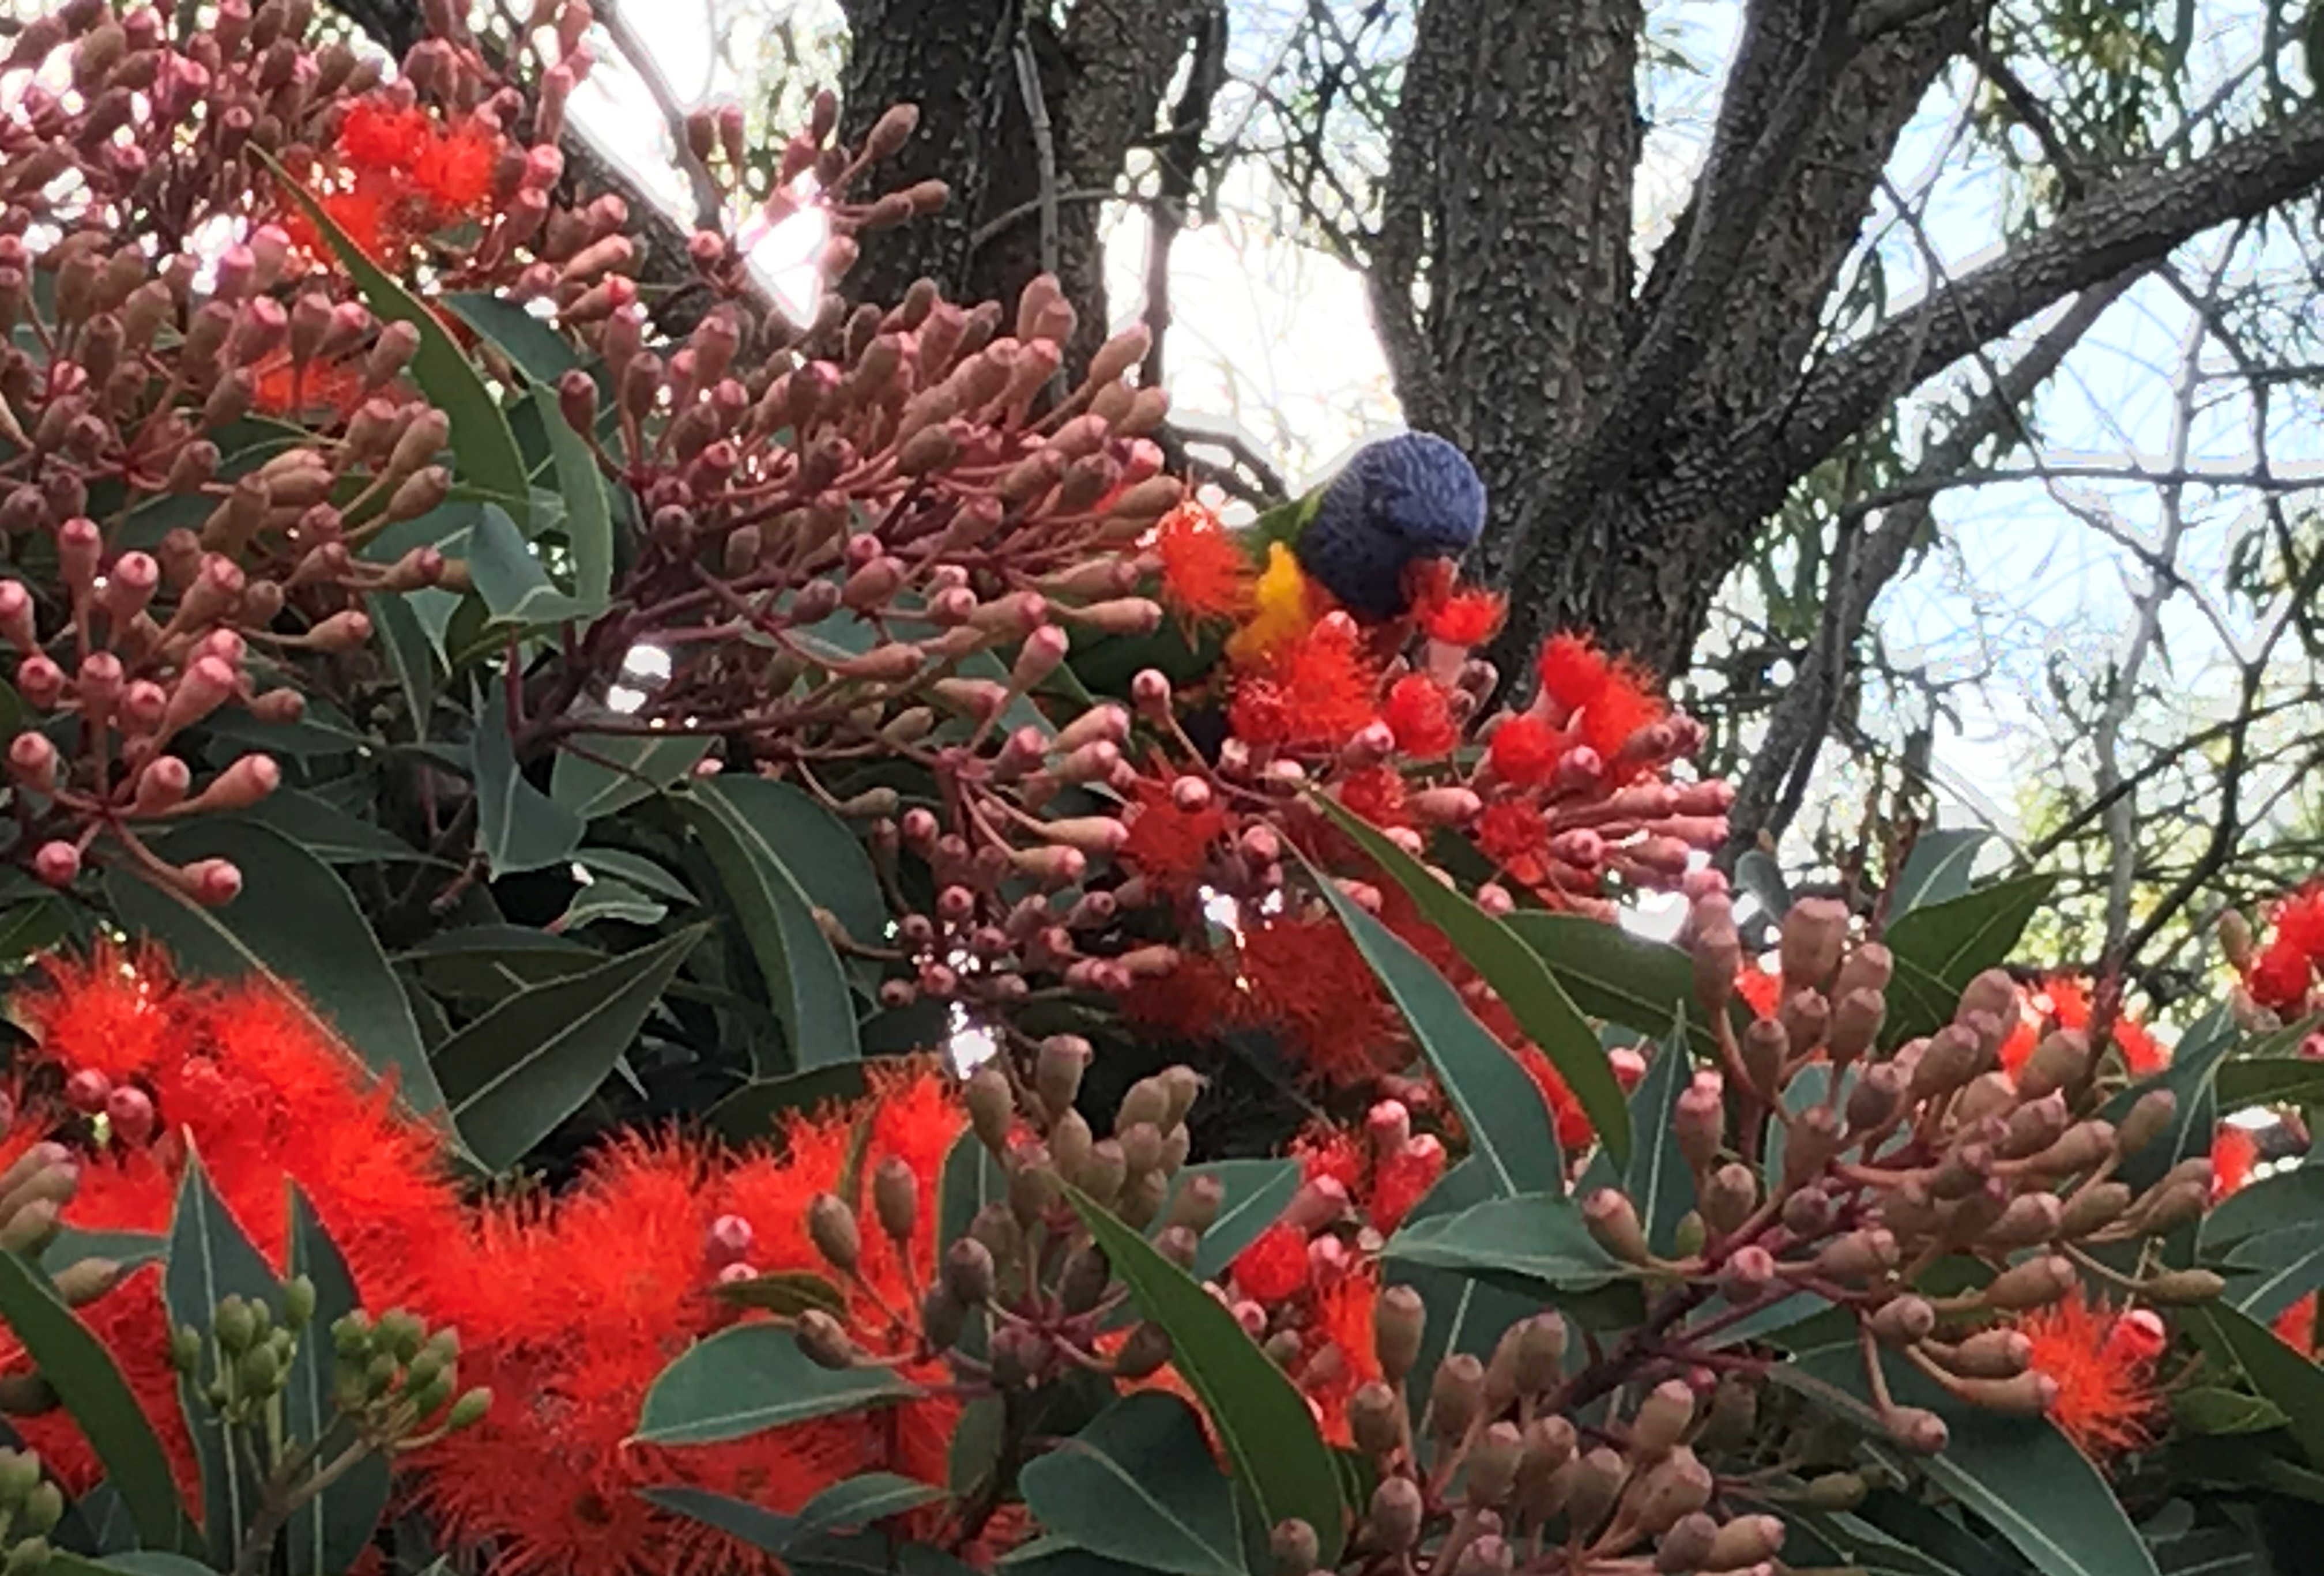 A wattle bird collects nectar on a callistemon (bottlebrush) tree, which is native to Australia.